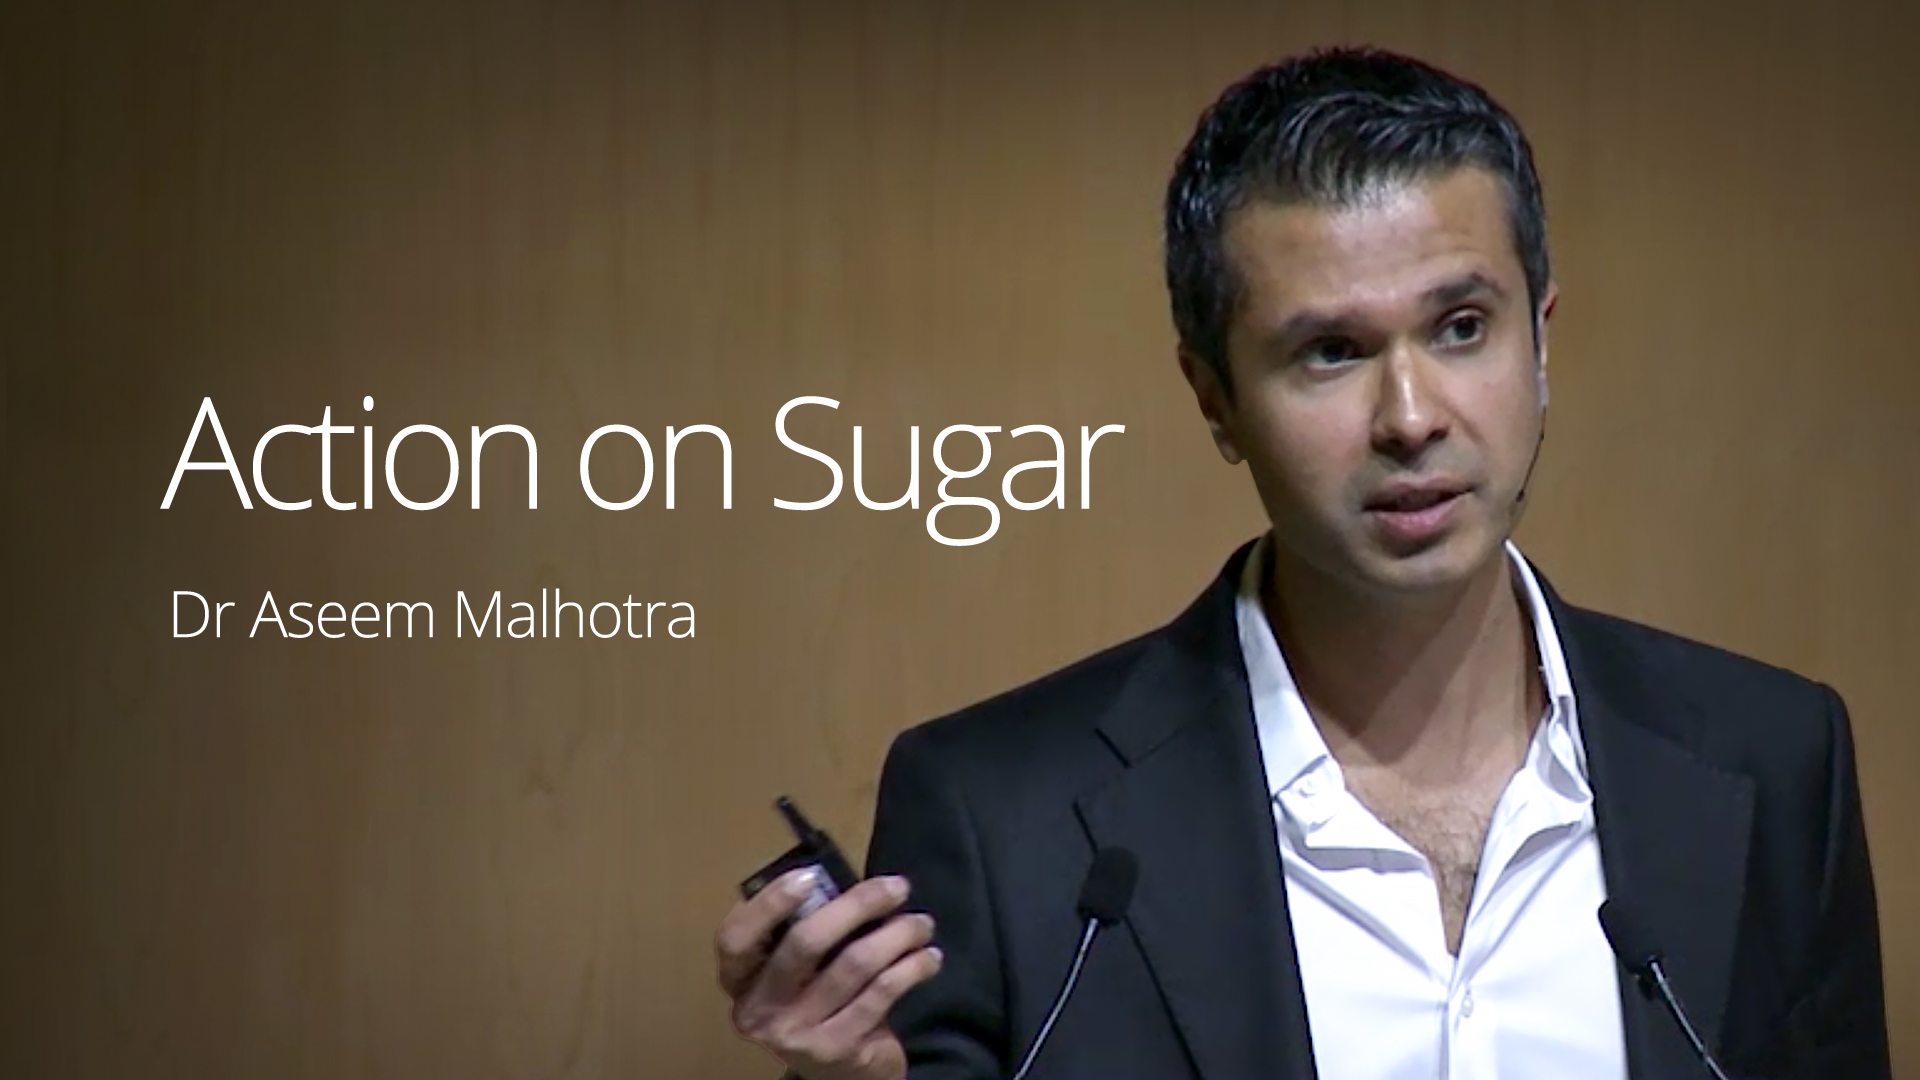 Dr. Aseem Malhotra - Action on Sugar (SA 2015)